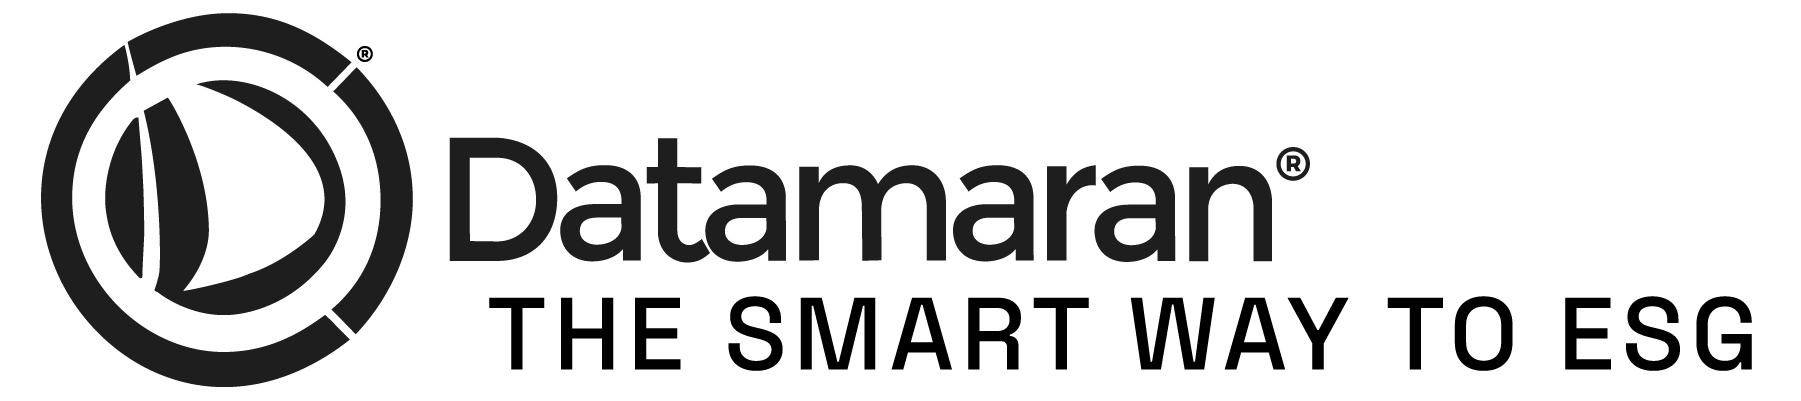 Datamaran Logo - The Smart Way to ESG - Black